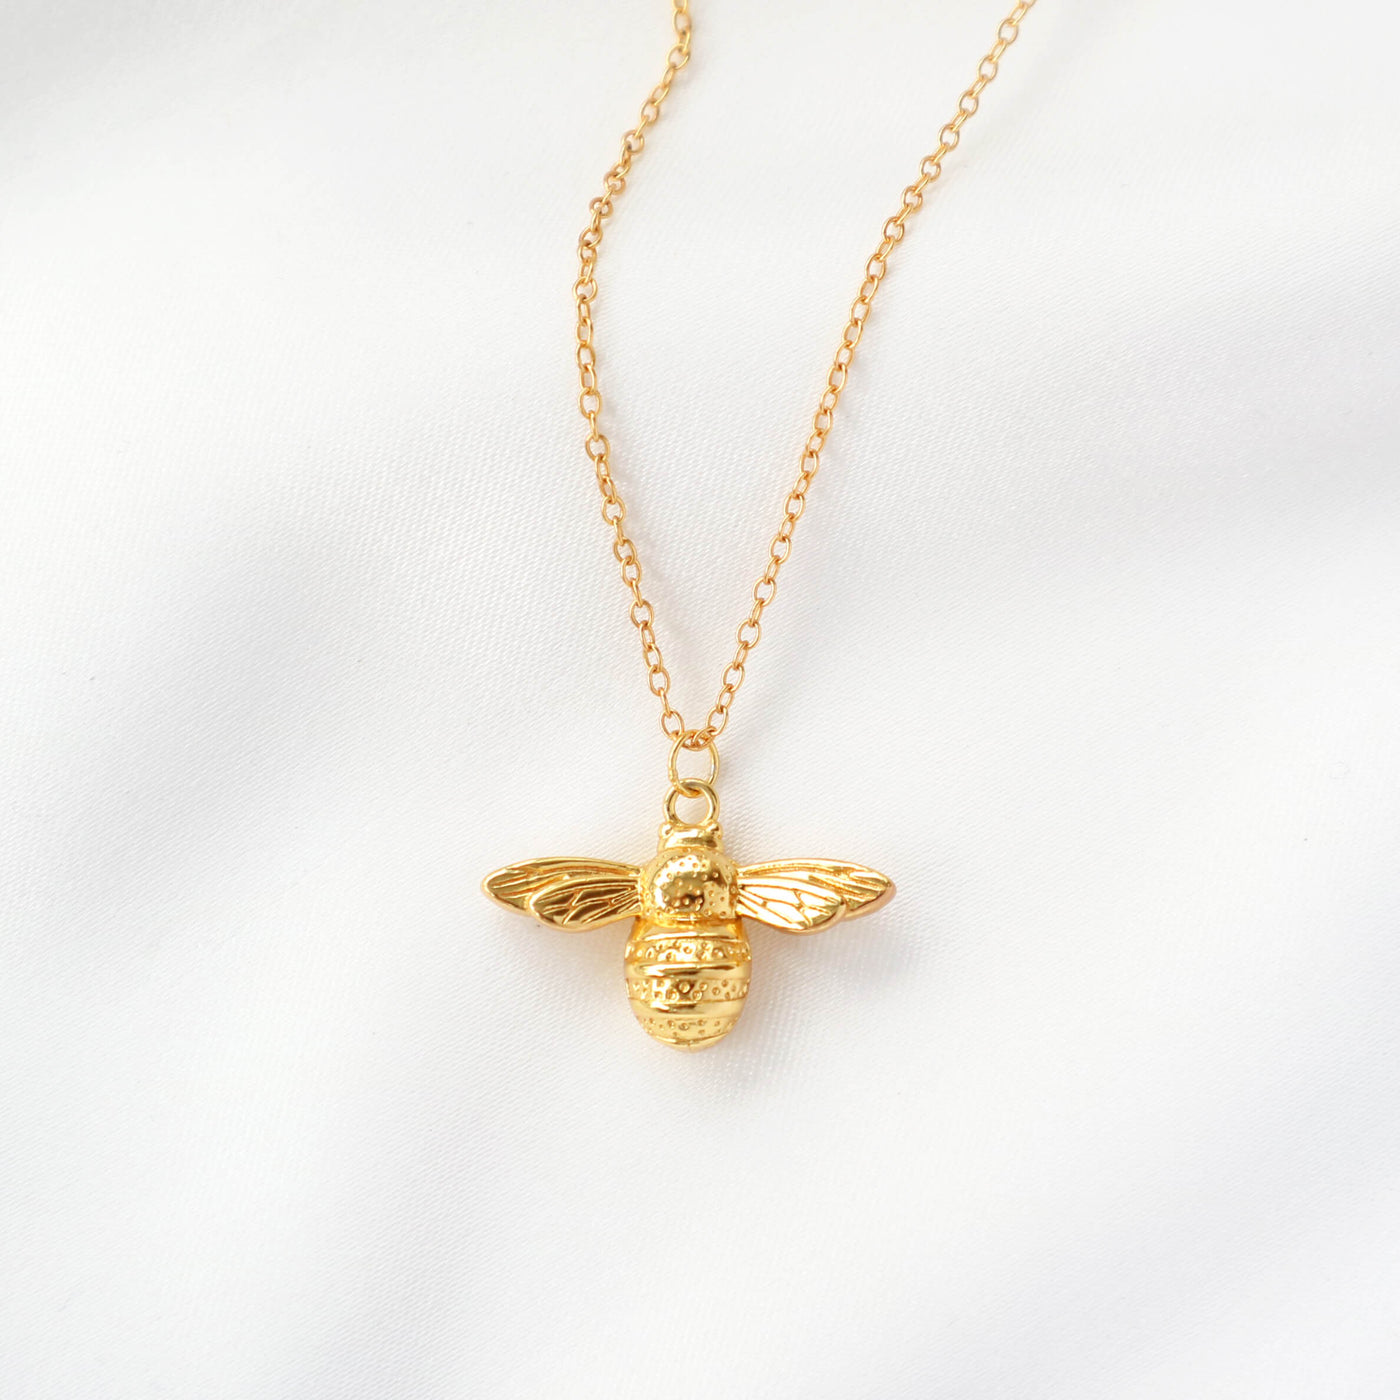 Gold bumble bee pendant necklace-Rani & Co. jewellery uk